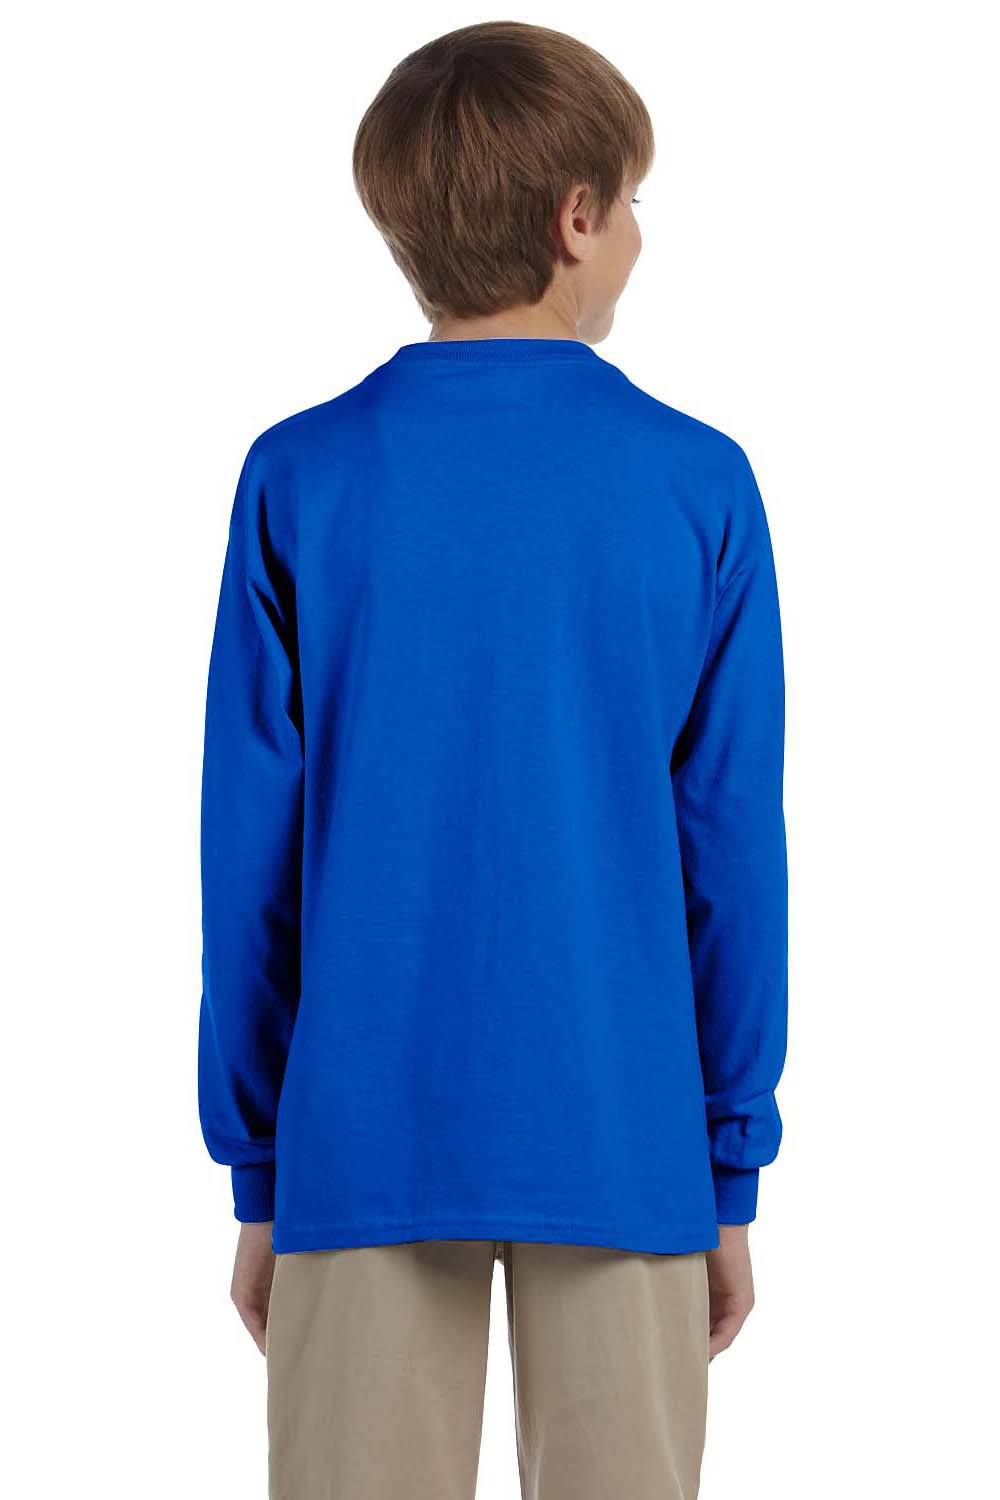 Gildan G240B Youth Ultra Long Sleeve Crewneck T-Shirt Royal Blue Back